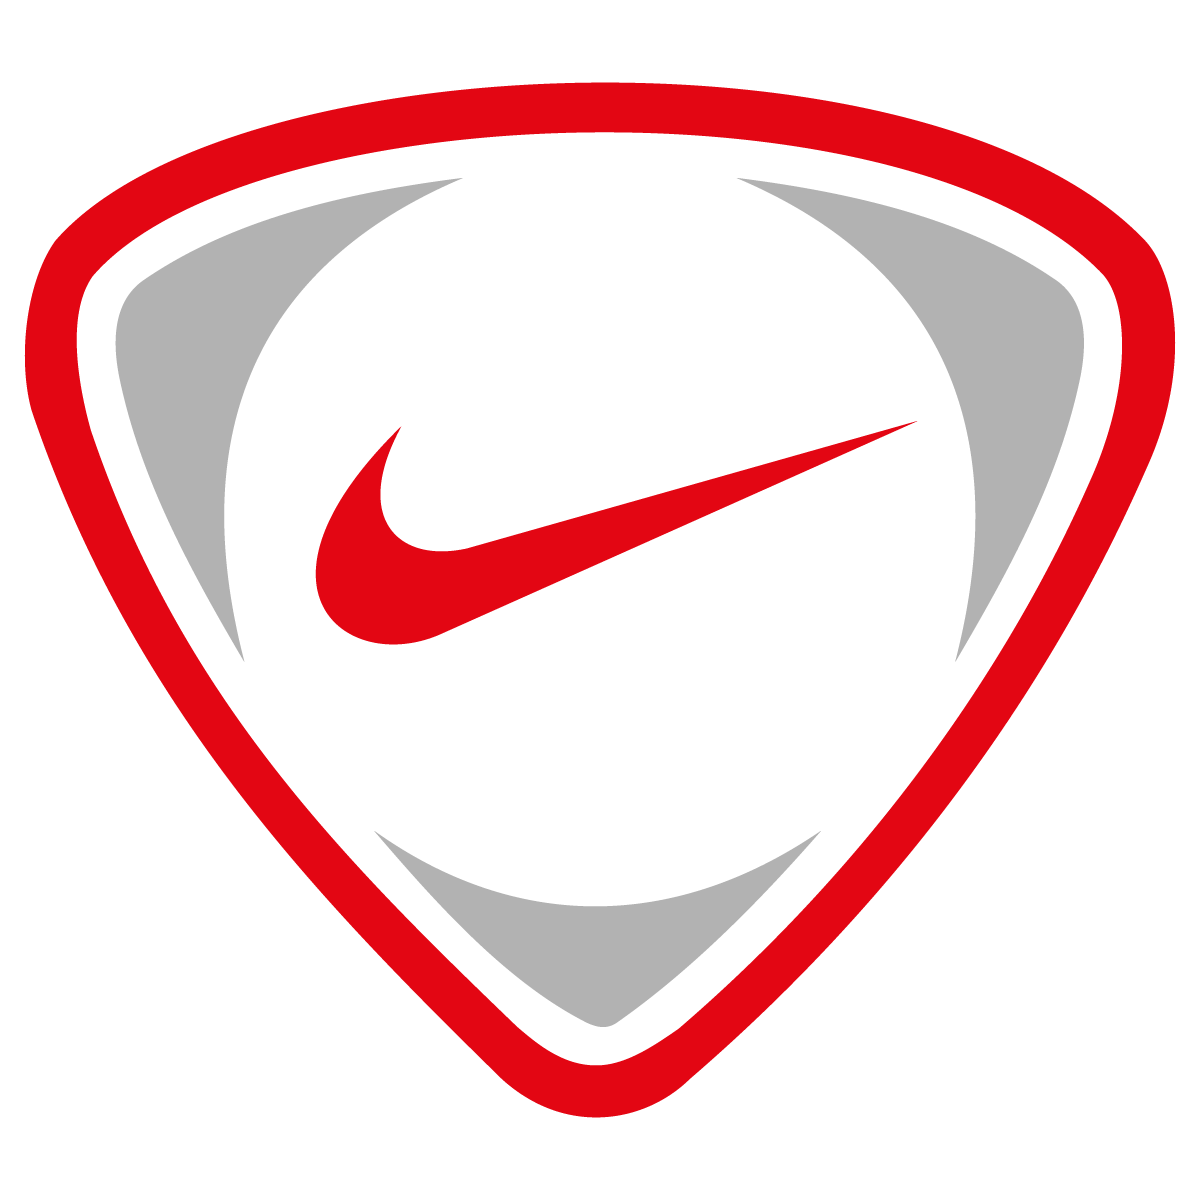 Nike Football Logo - Nike Football Logo Vector | Free Vector Silhouette Graphics AI EPS ...